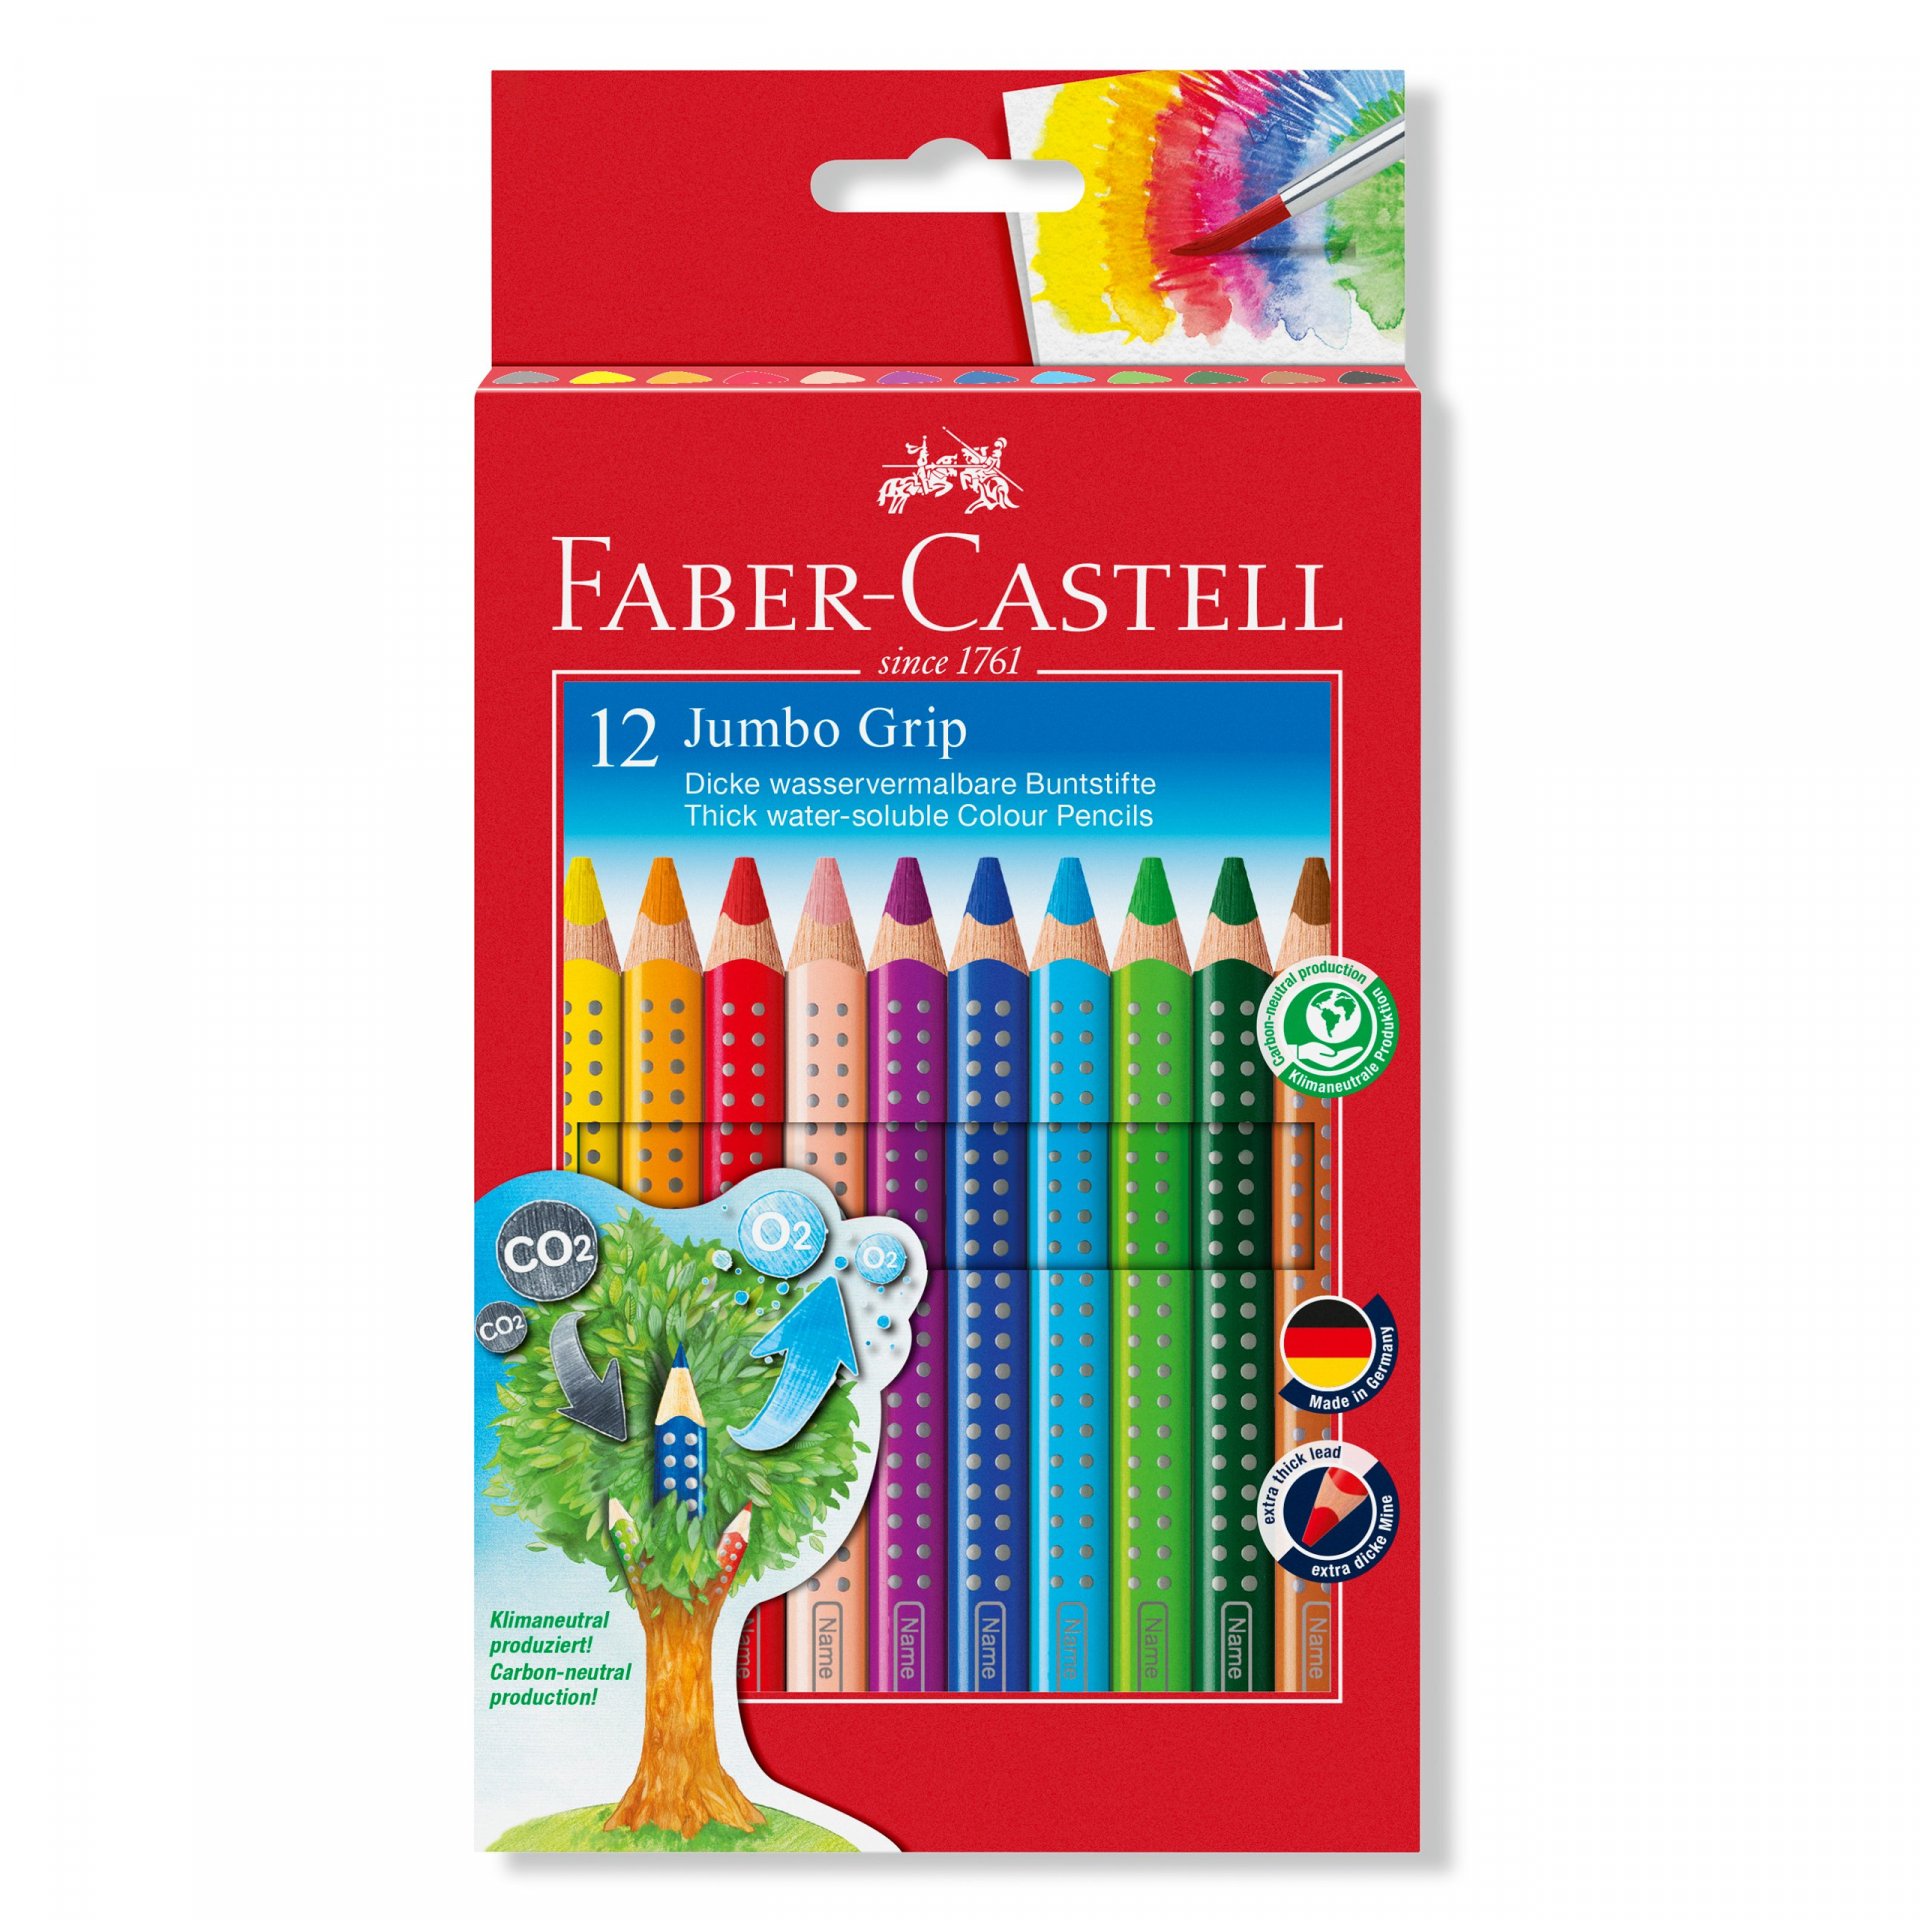 13+ Colored Wax Pencils